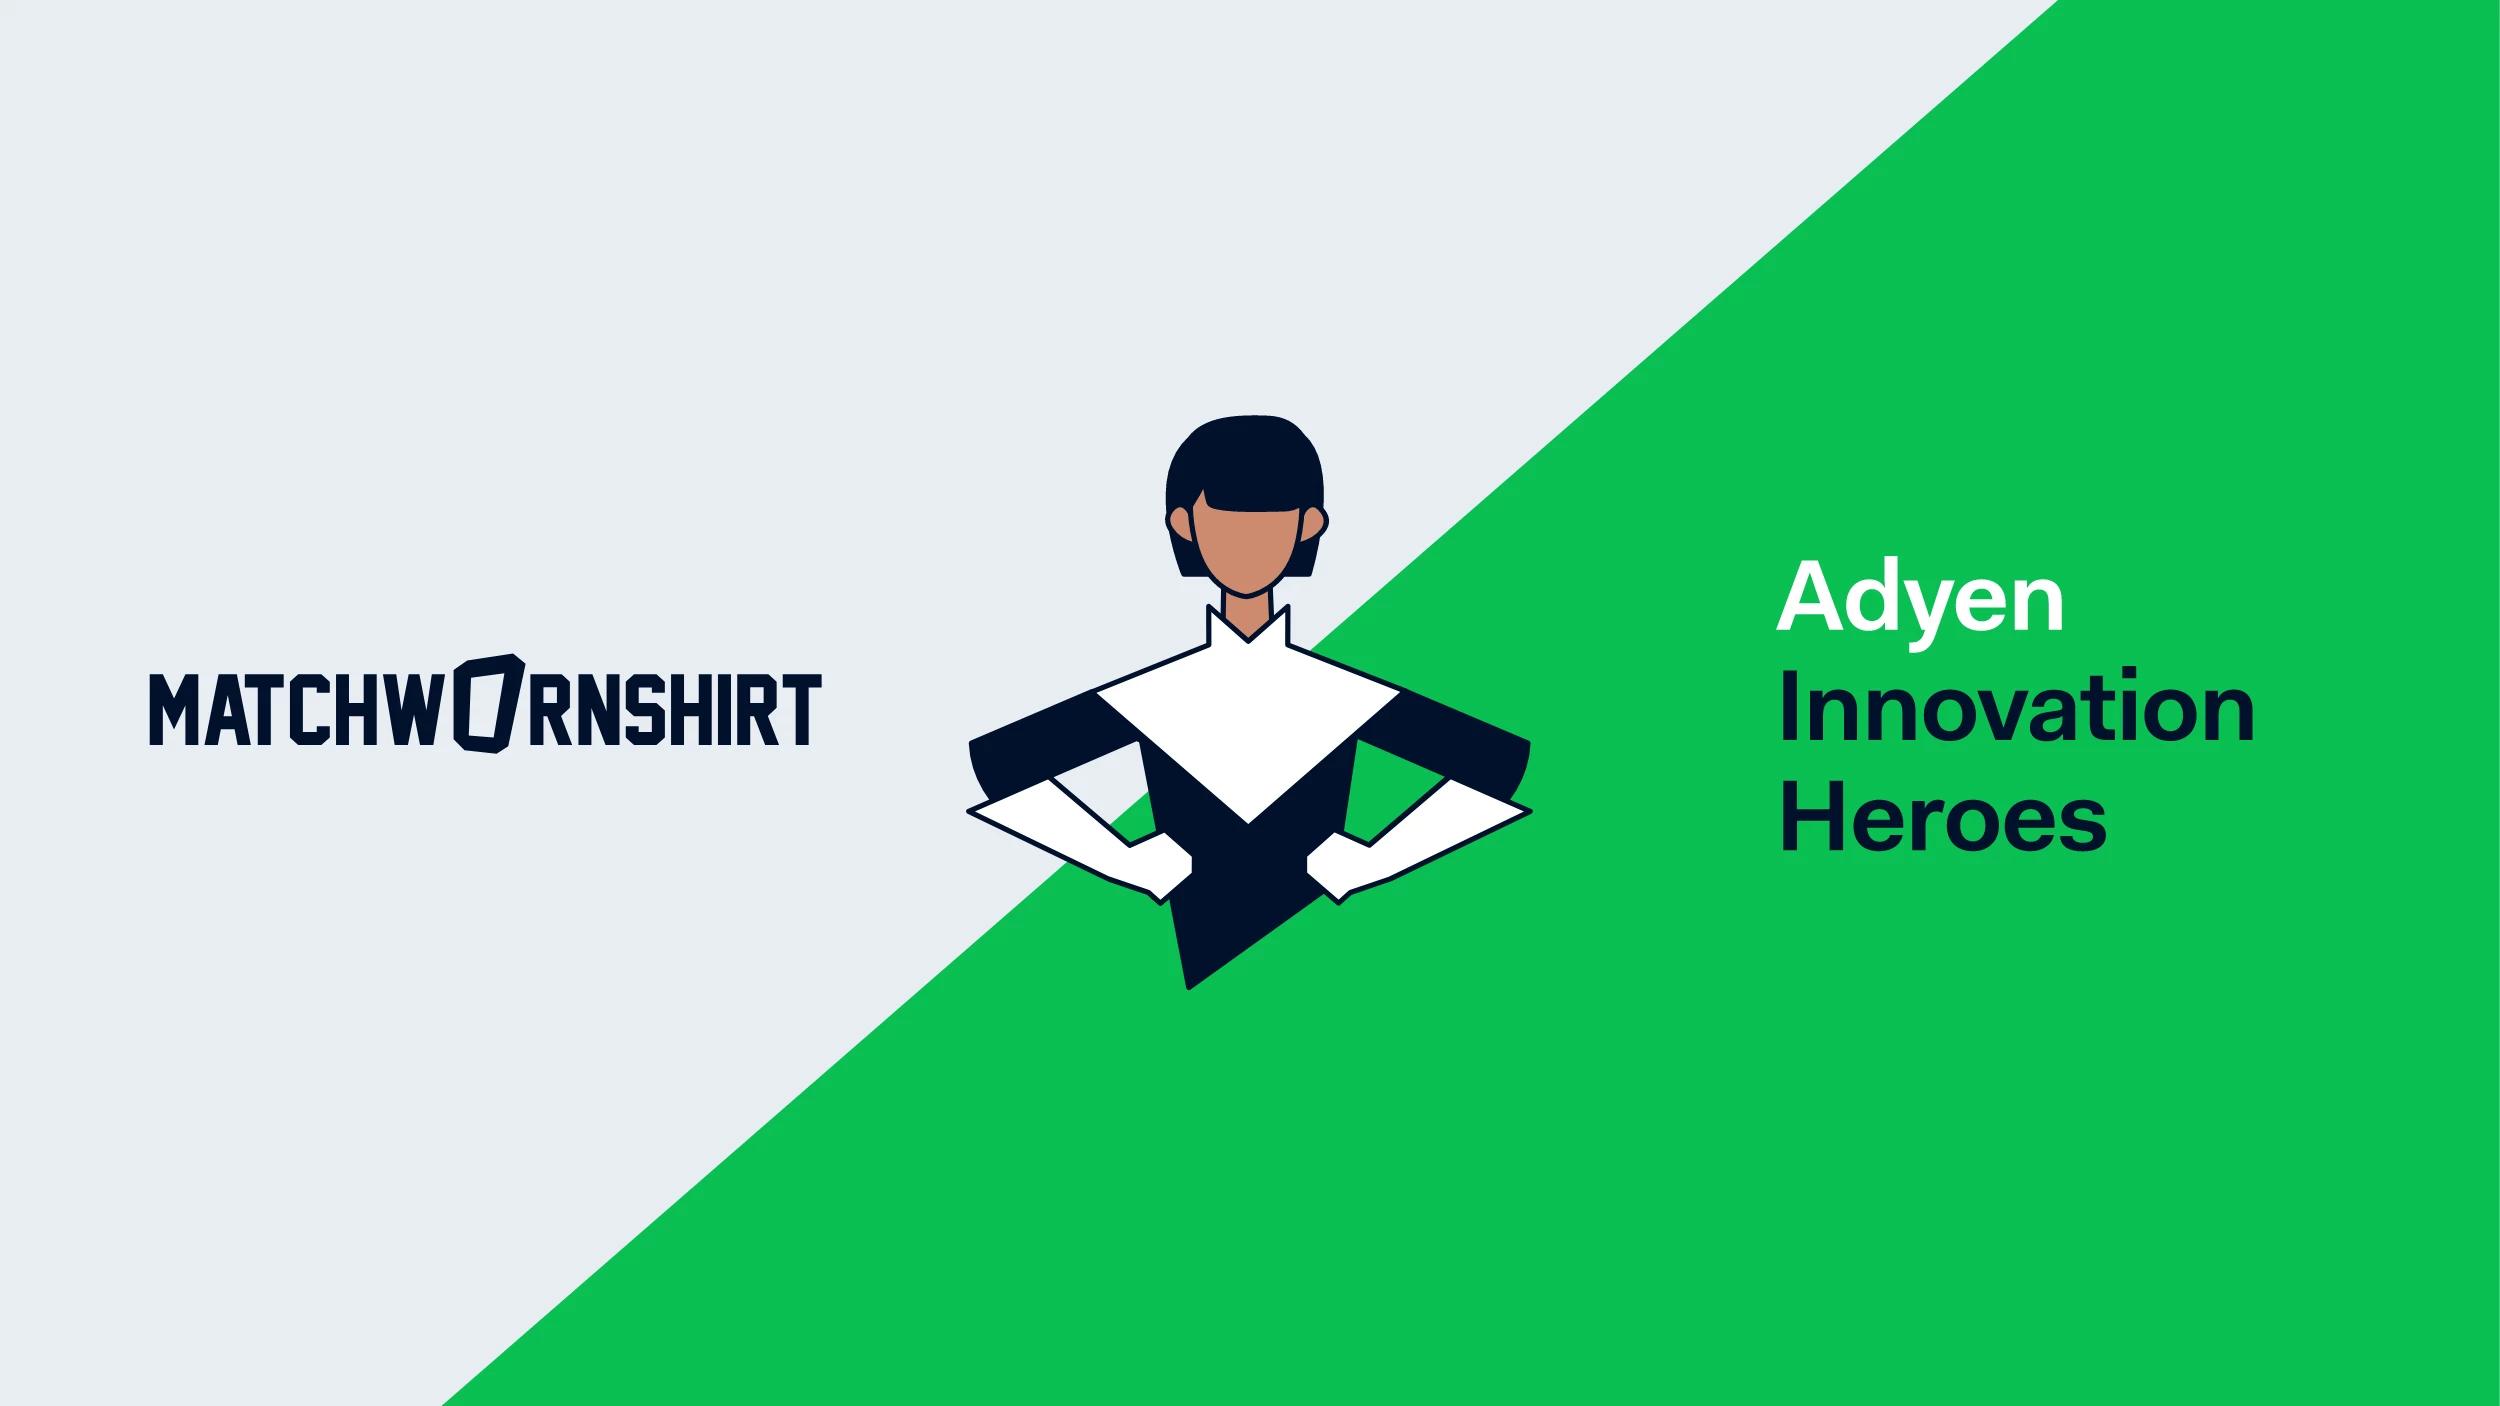 Match Worn Shirt - Innovation Heroes